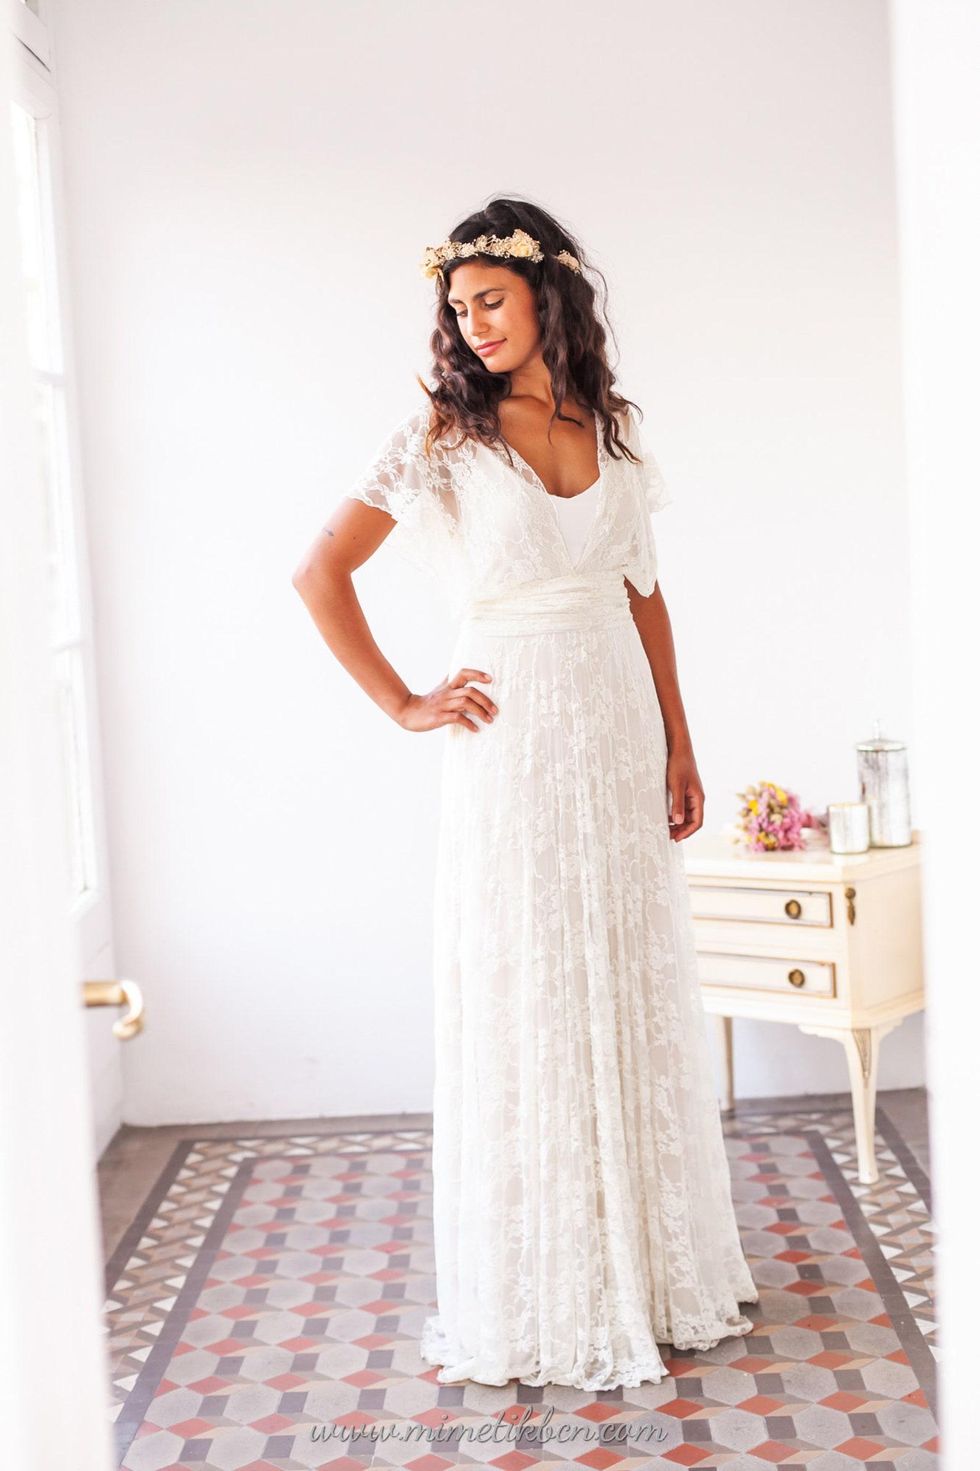 Grecian Style Wedding Dresses & Greek-Inspired Gown Ideas - Brit + Co